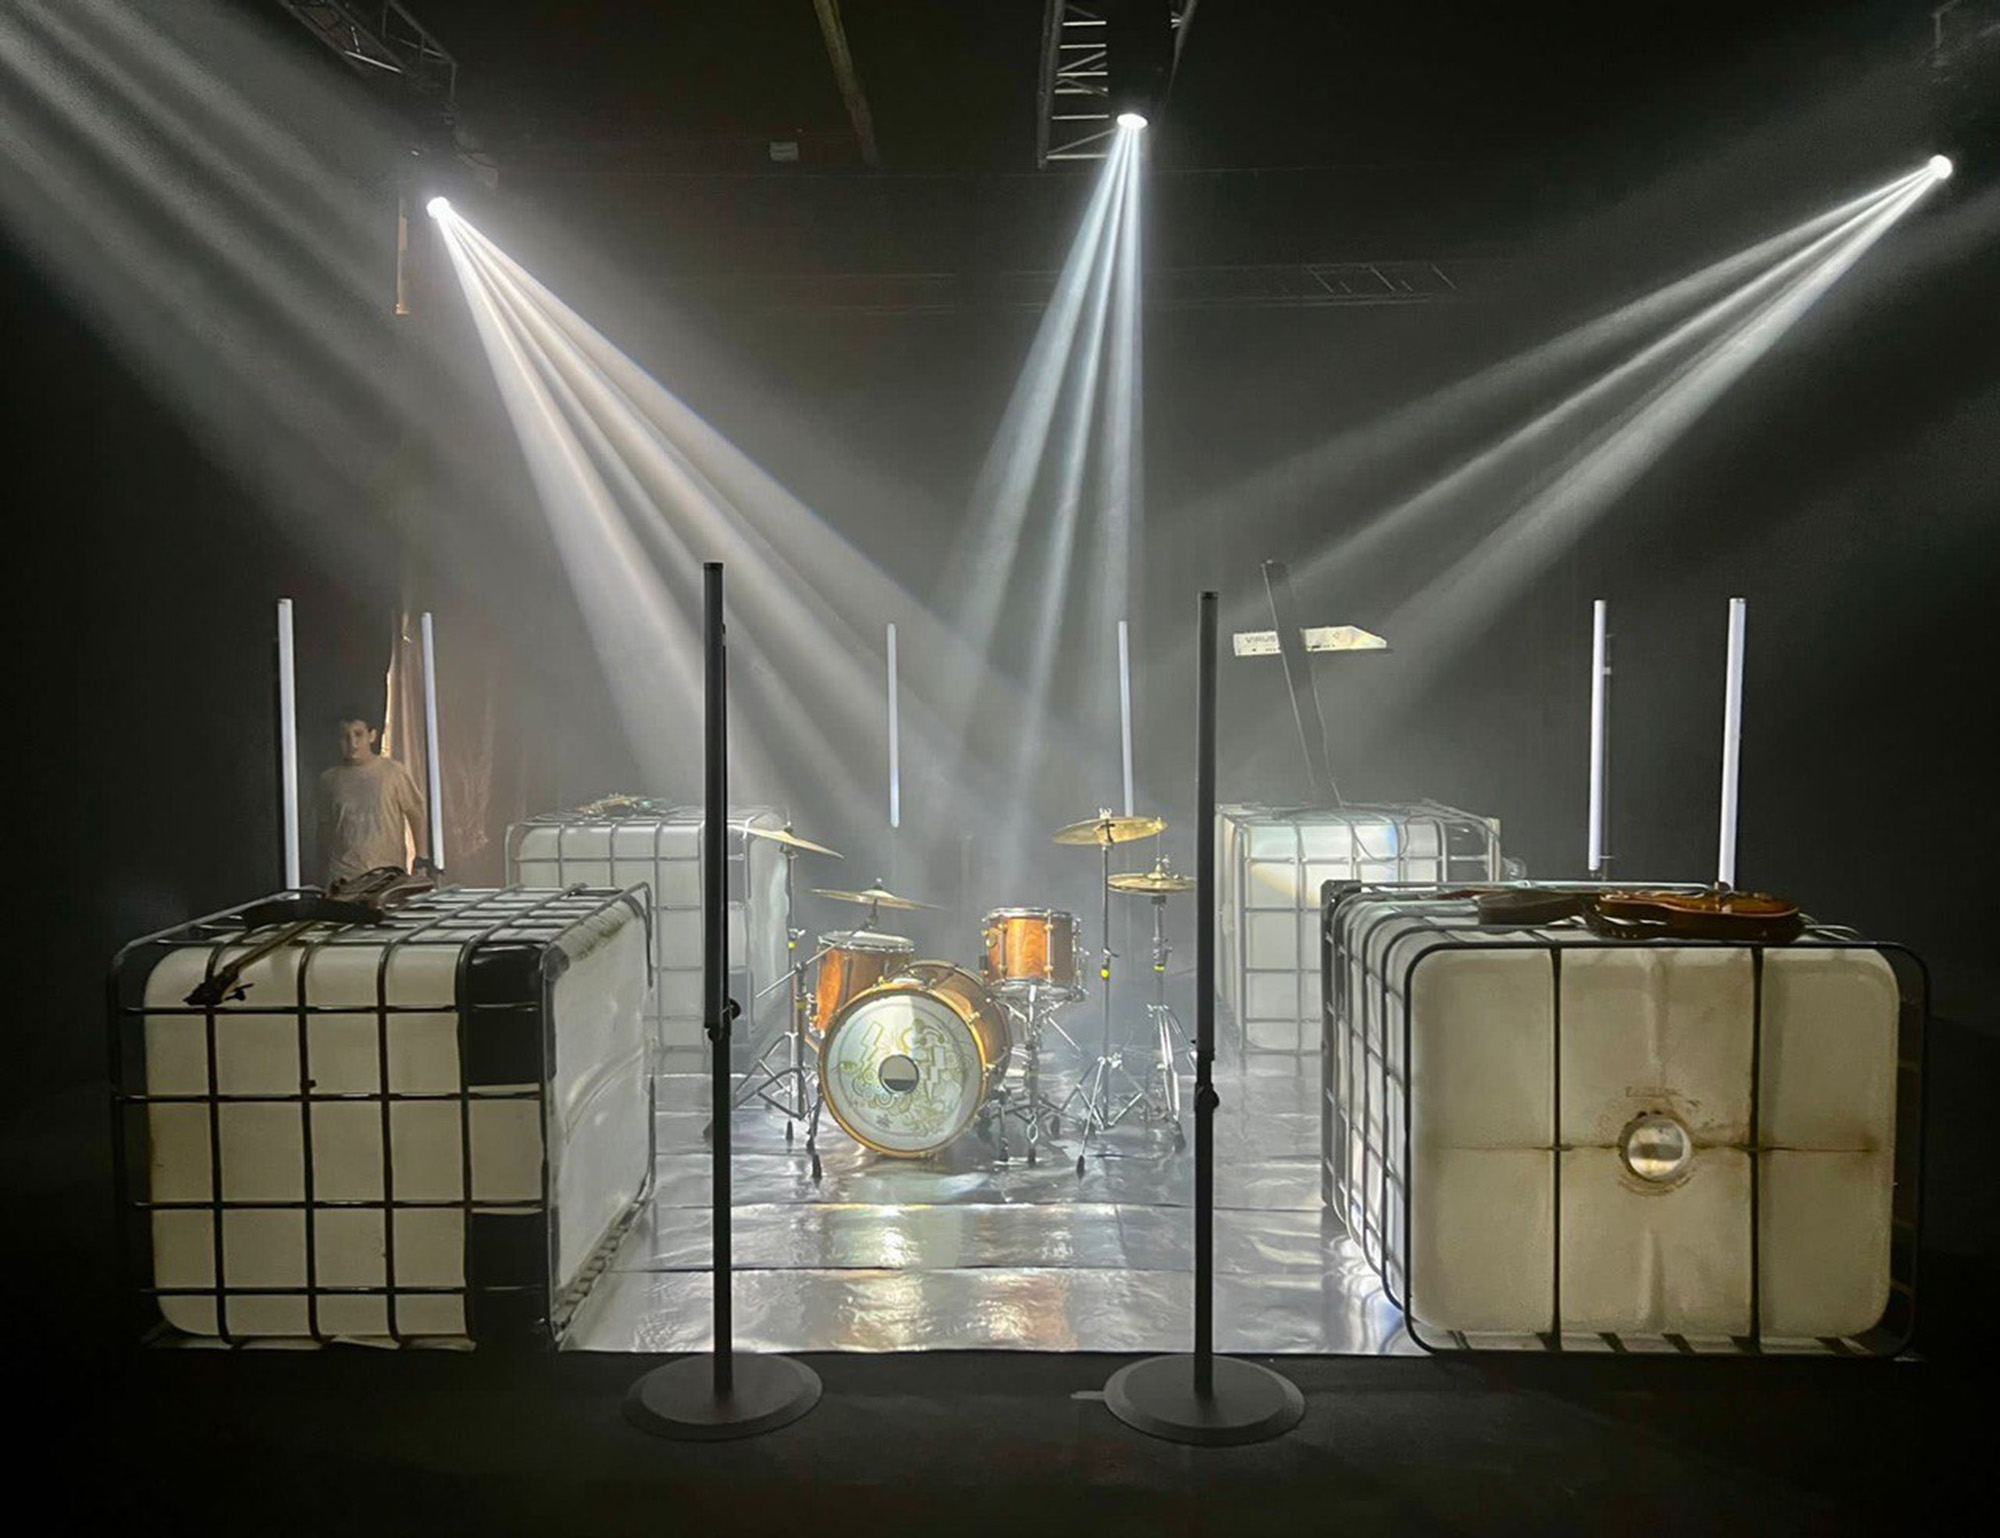 Stage con luces montado para rodar un videoclip musical